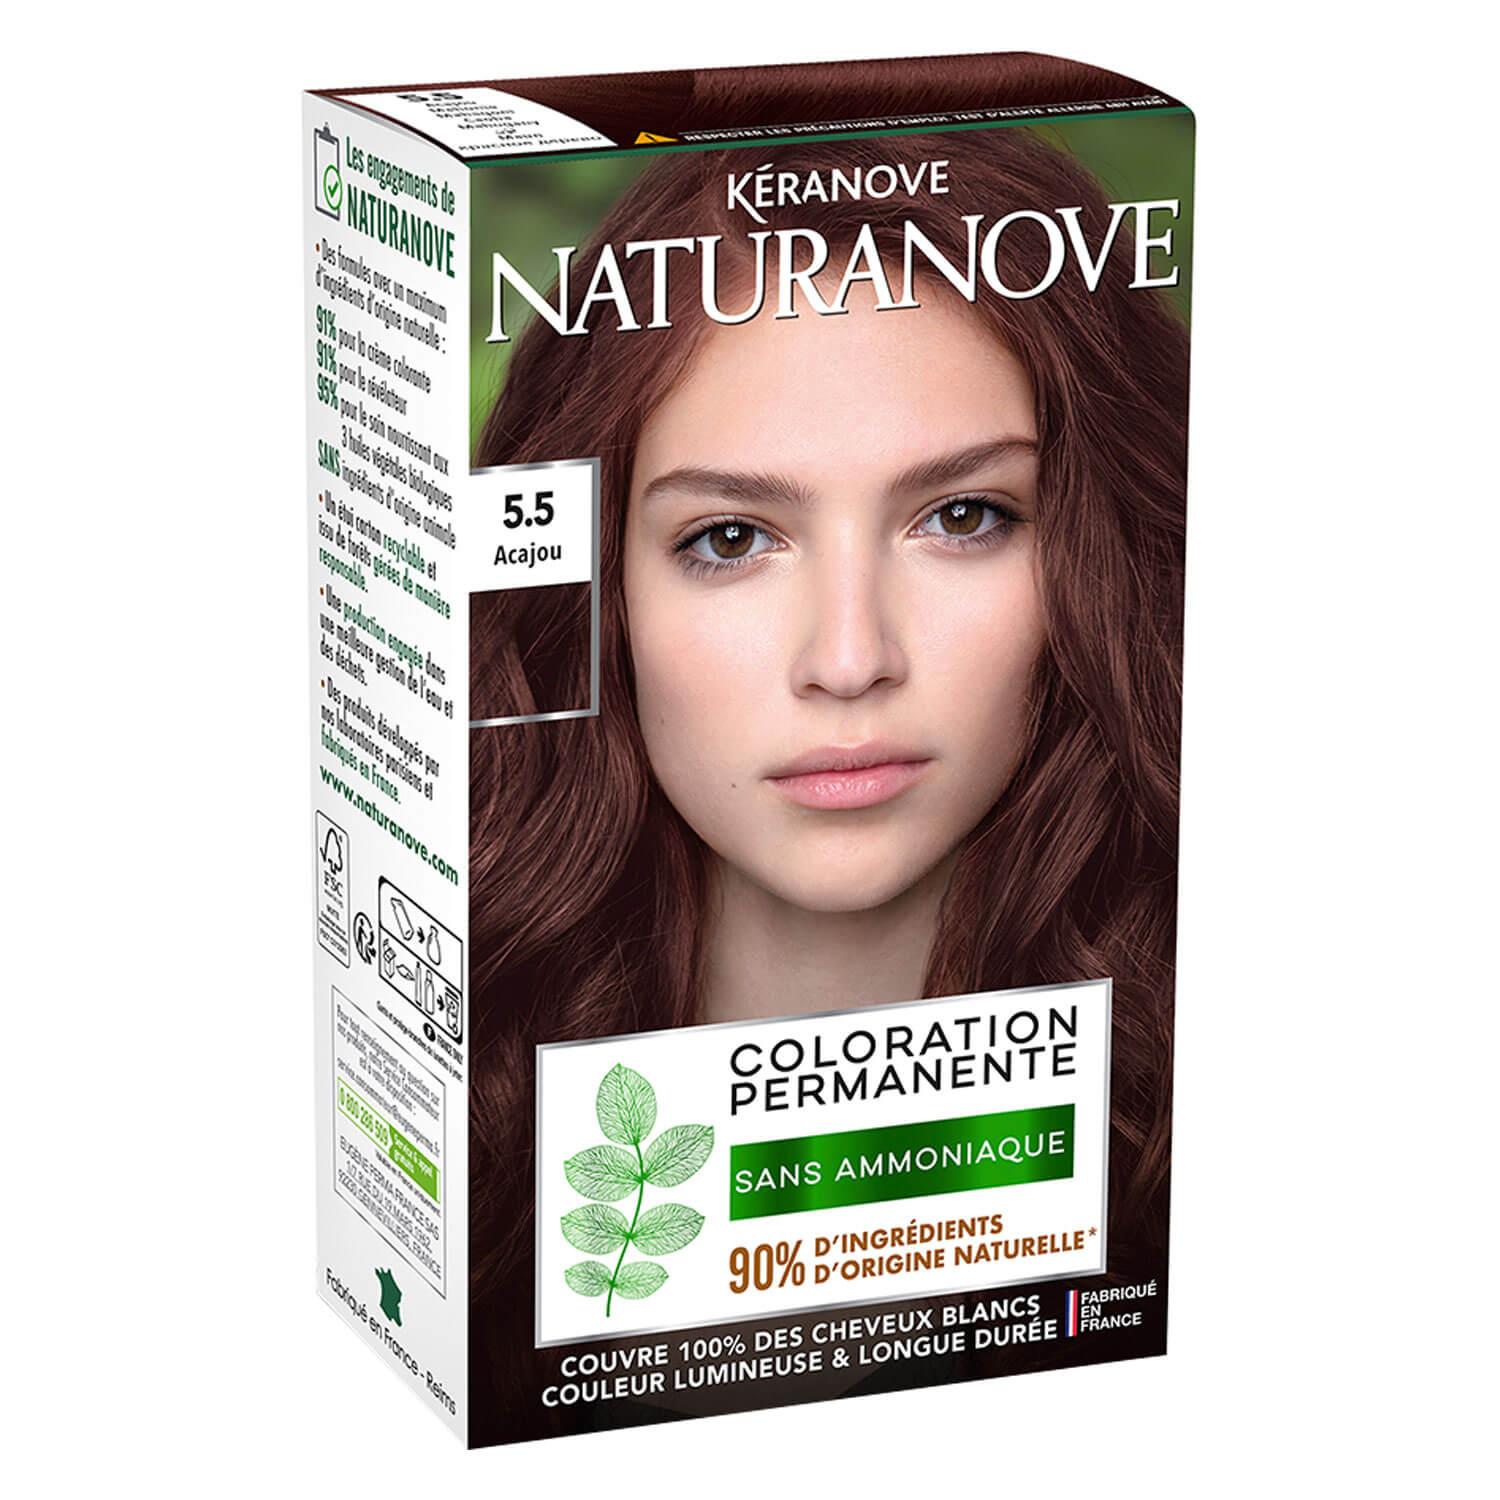 Naturanove - Dauerhafte Haarfarbe Mahagoni 5.5